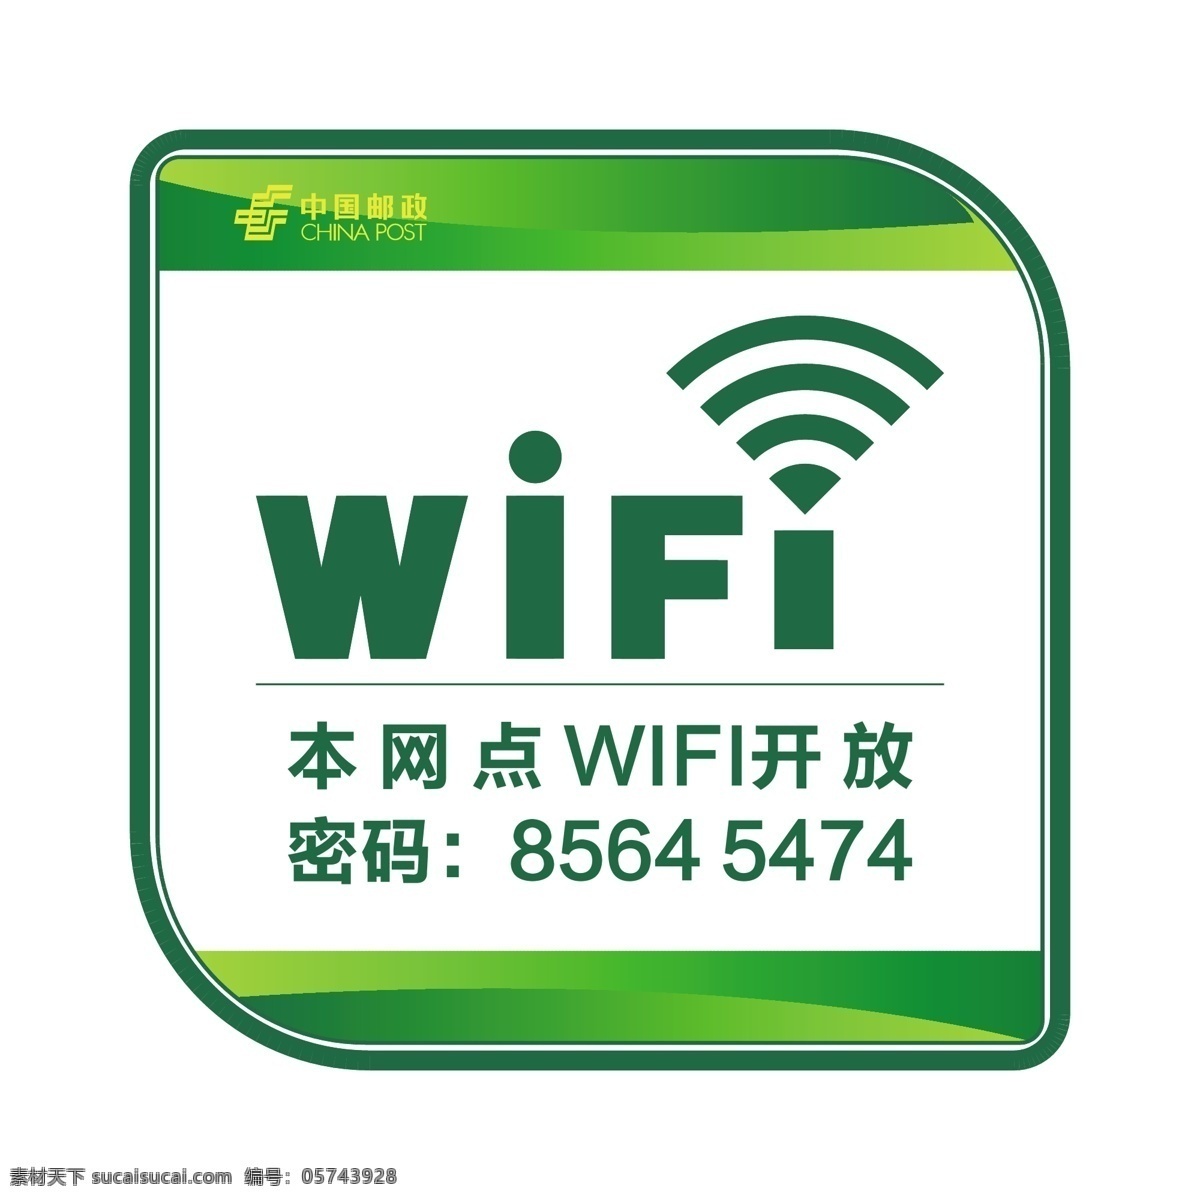 wifi开放 wifi wifi图标 wifi设计 小 图标 wifi标志 我的wifi 免费wifi 网络 标志 免费 办公图标 商务图标 商务办公图标 商务小图标 图标集锦 标志图标 公共标识标志